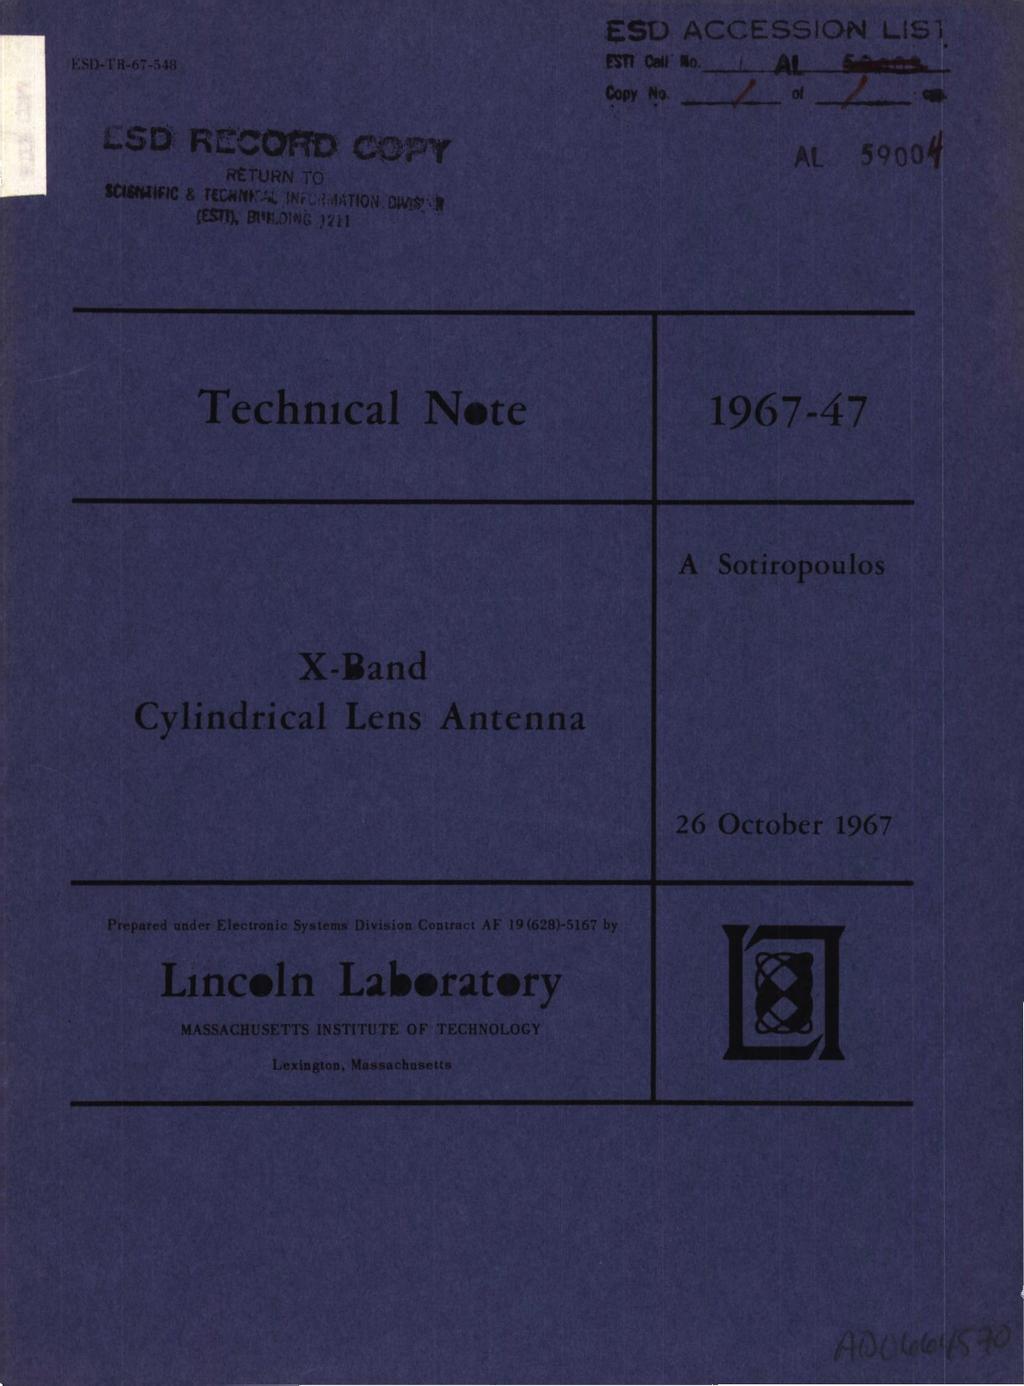 3D RECOflO C Technical Note 1967-47 A.